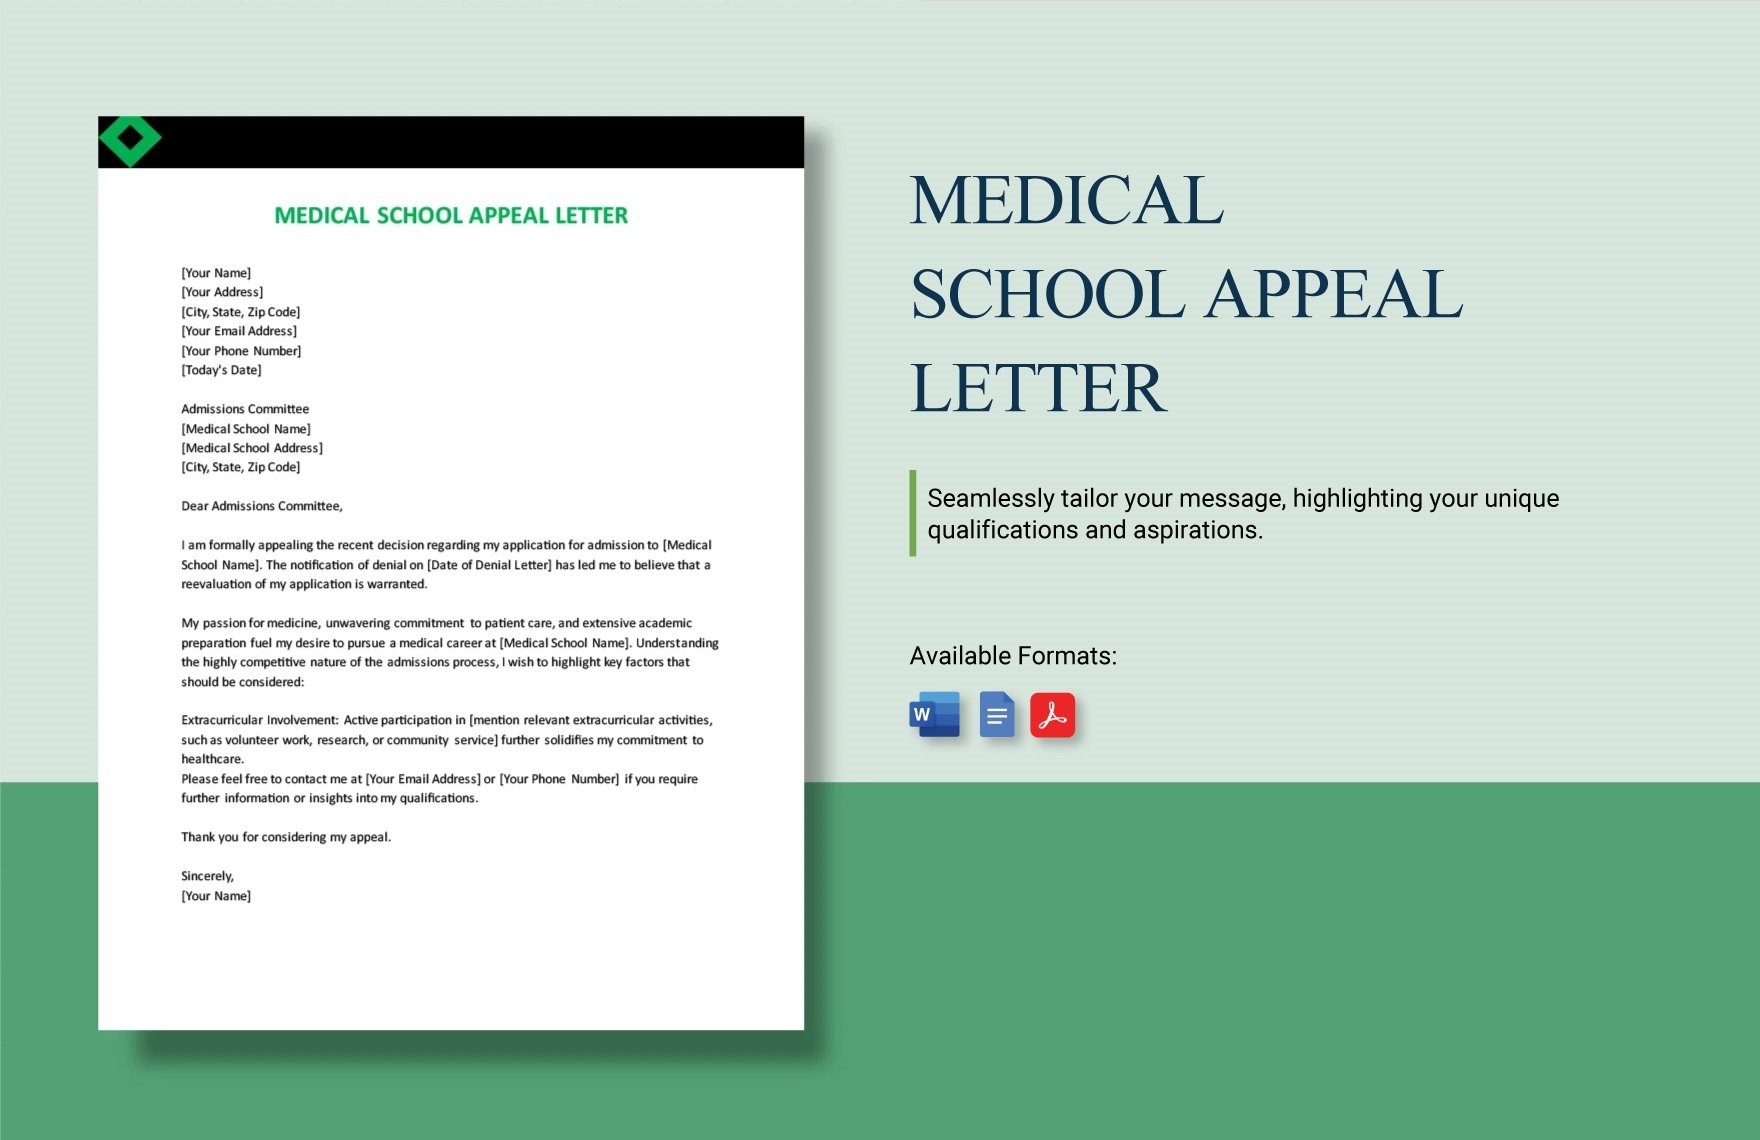 Medical School Appeal Letter in Word, Google Docs, PDF